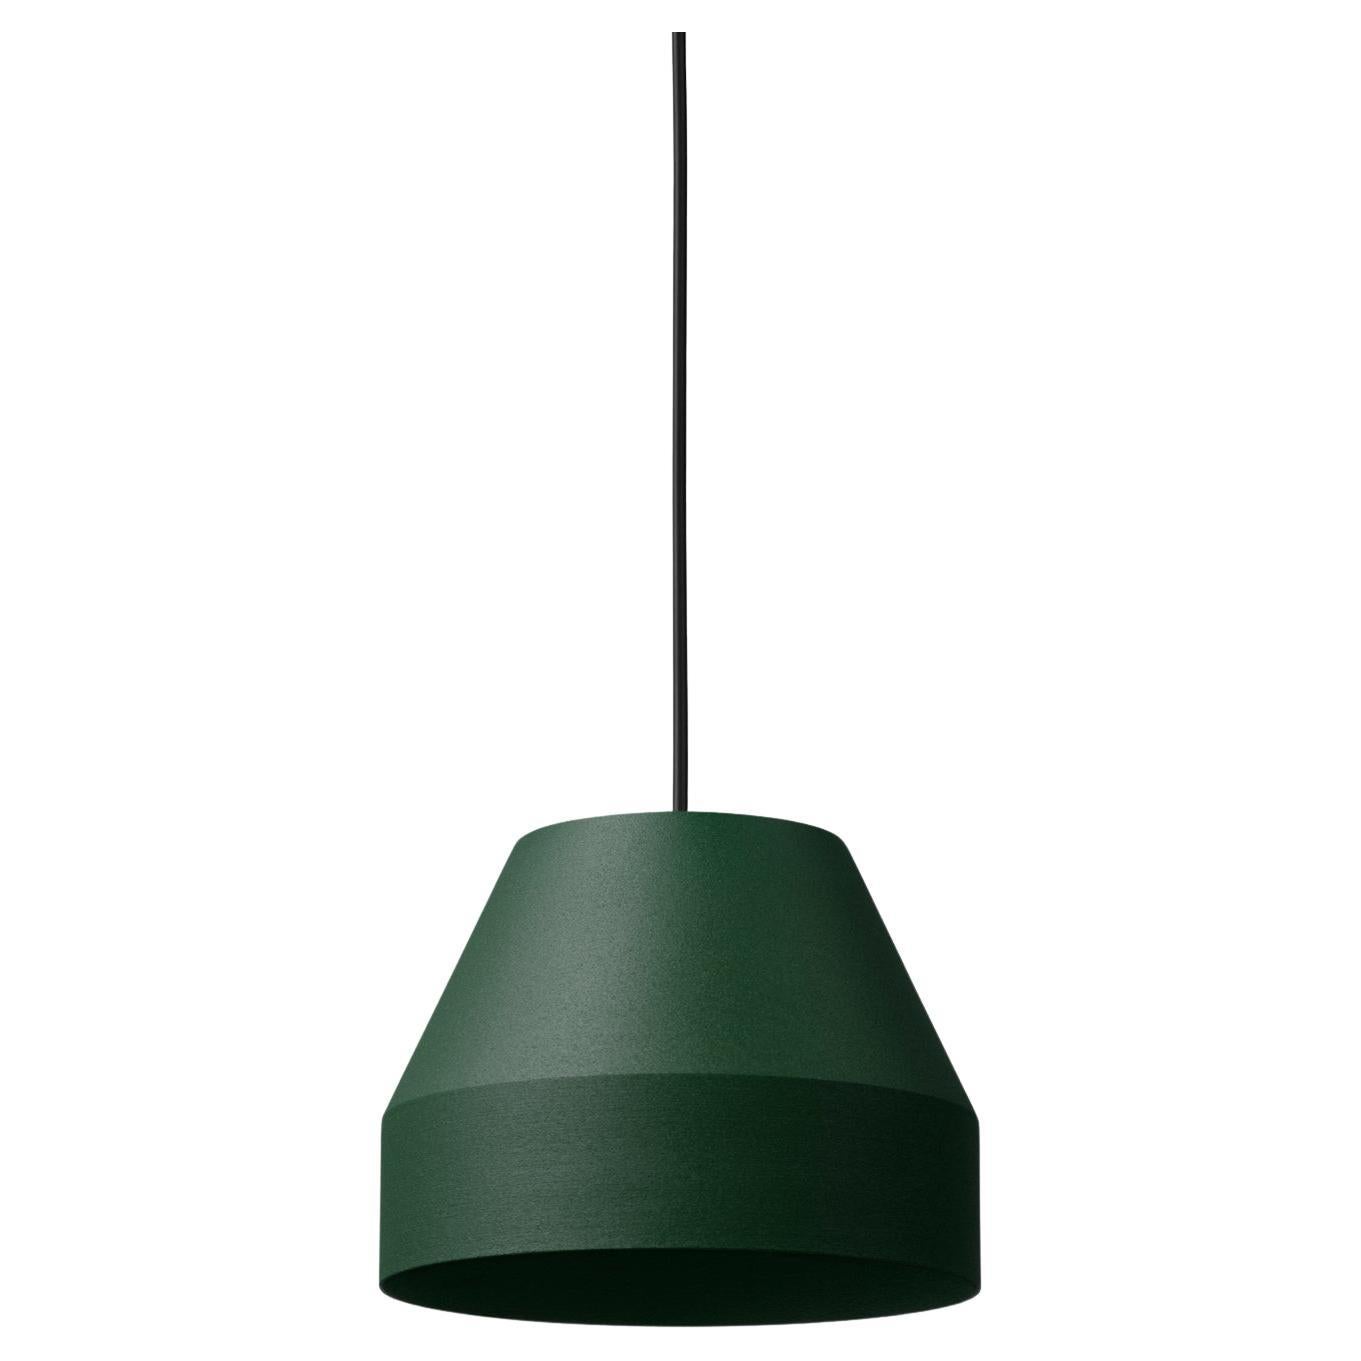 Petite lampe suspendue Cap Forest Cap de +kouple en vente